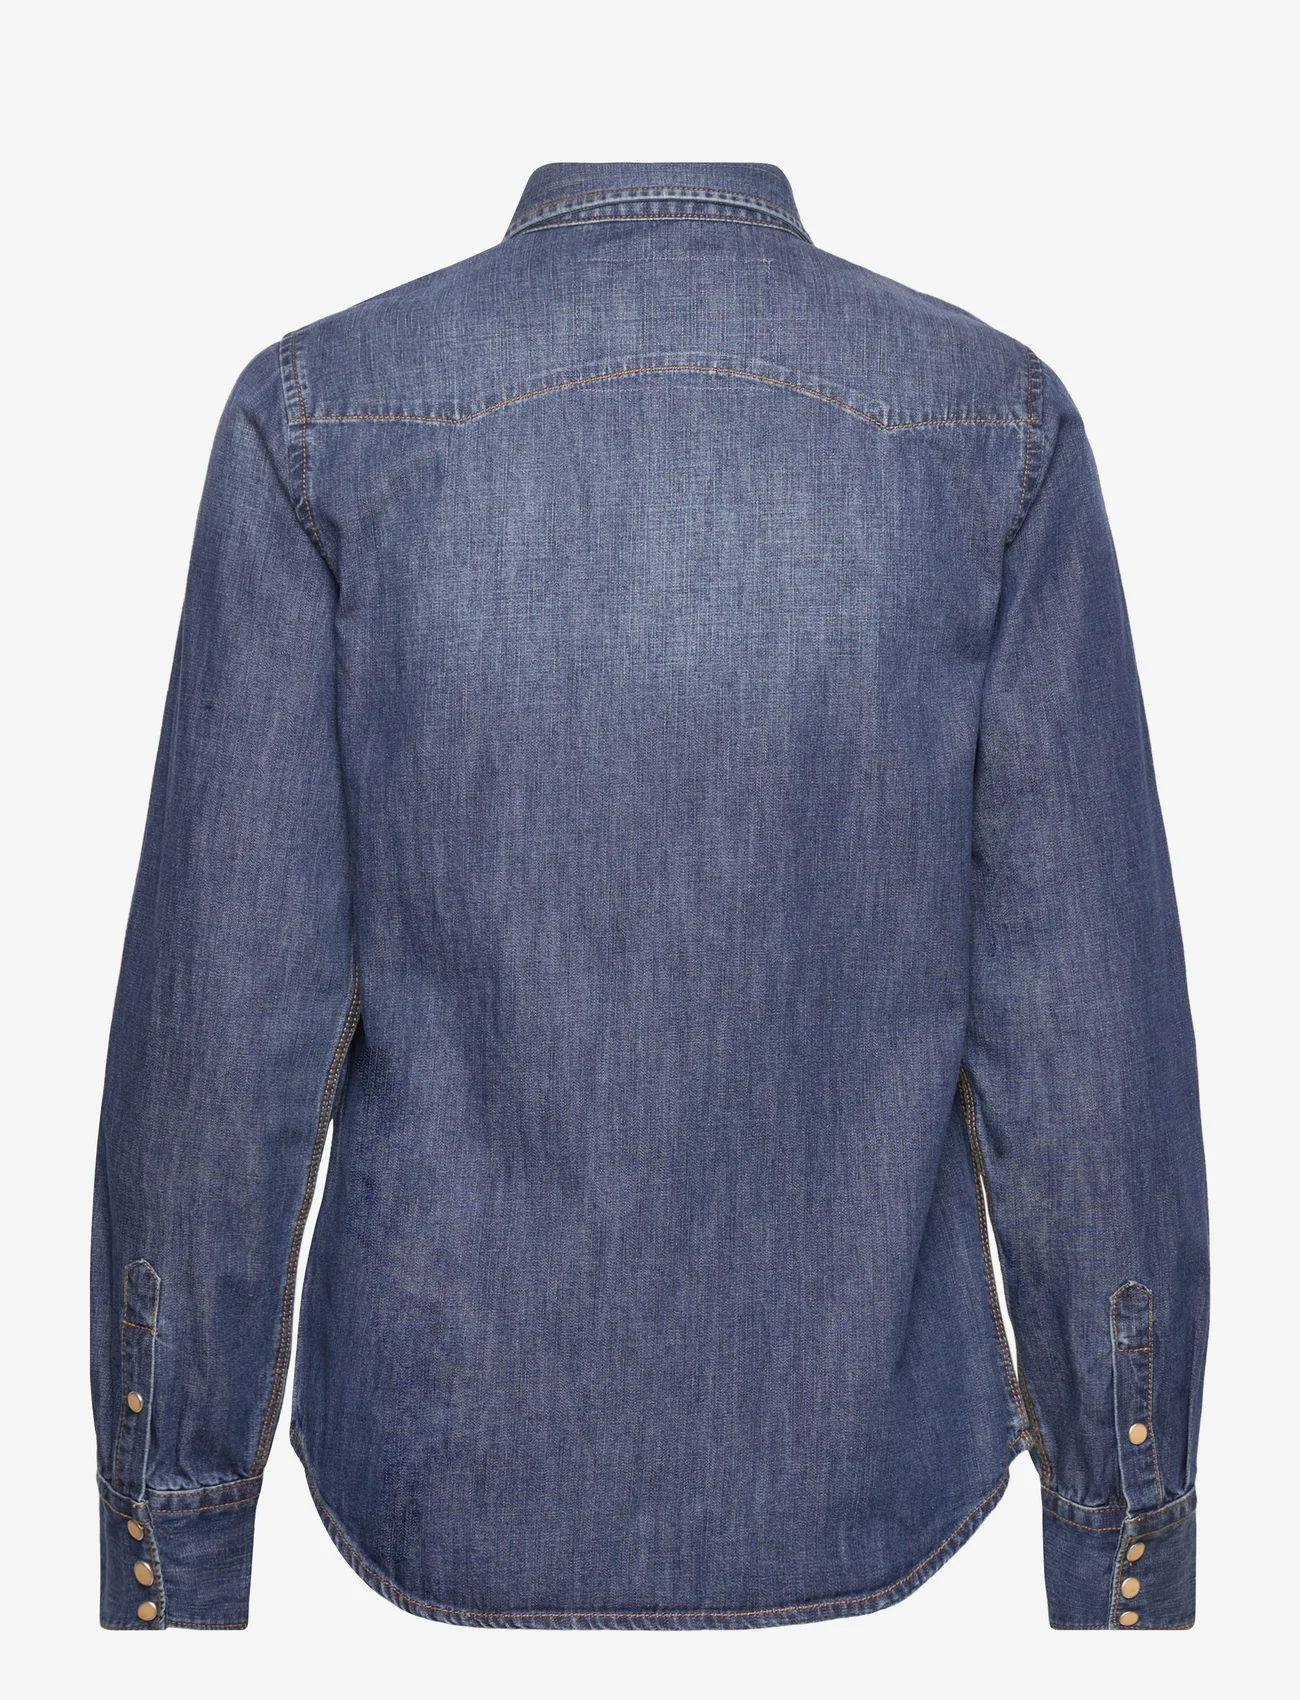 Replay - Shirt SLIM Rose Label Pack - långärmade skjortor - blue - 1